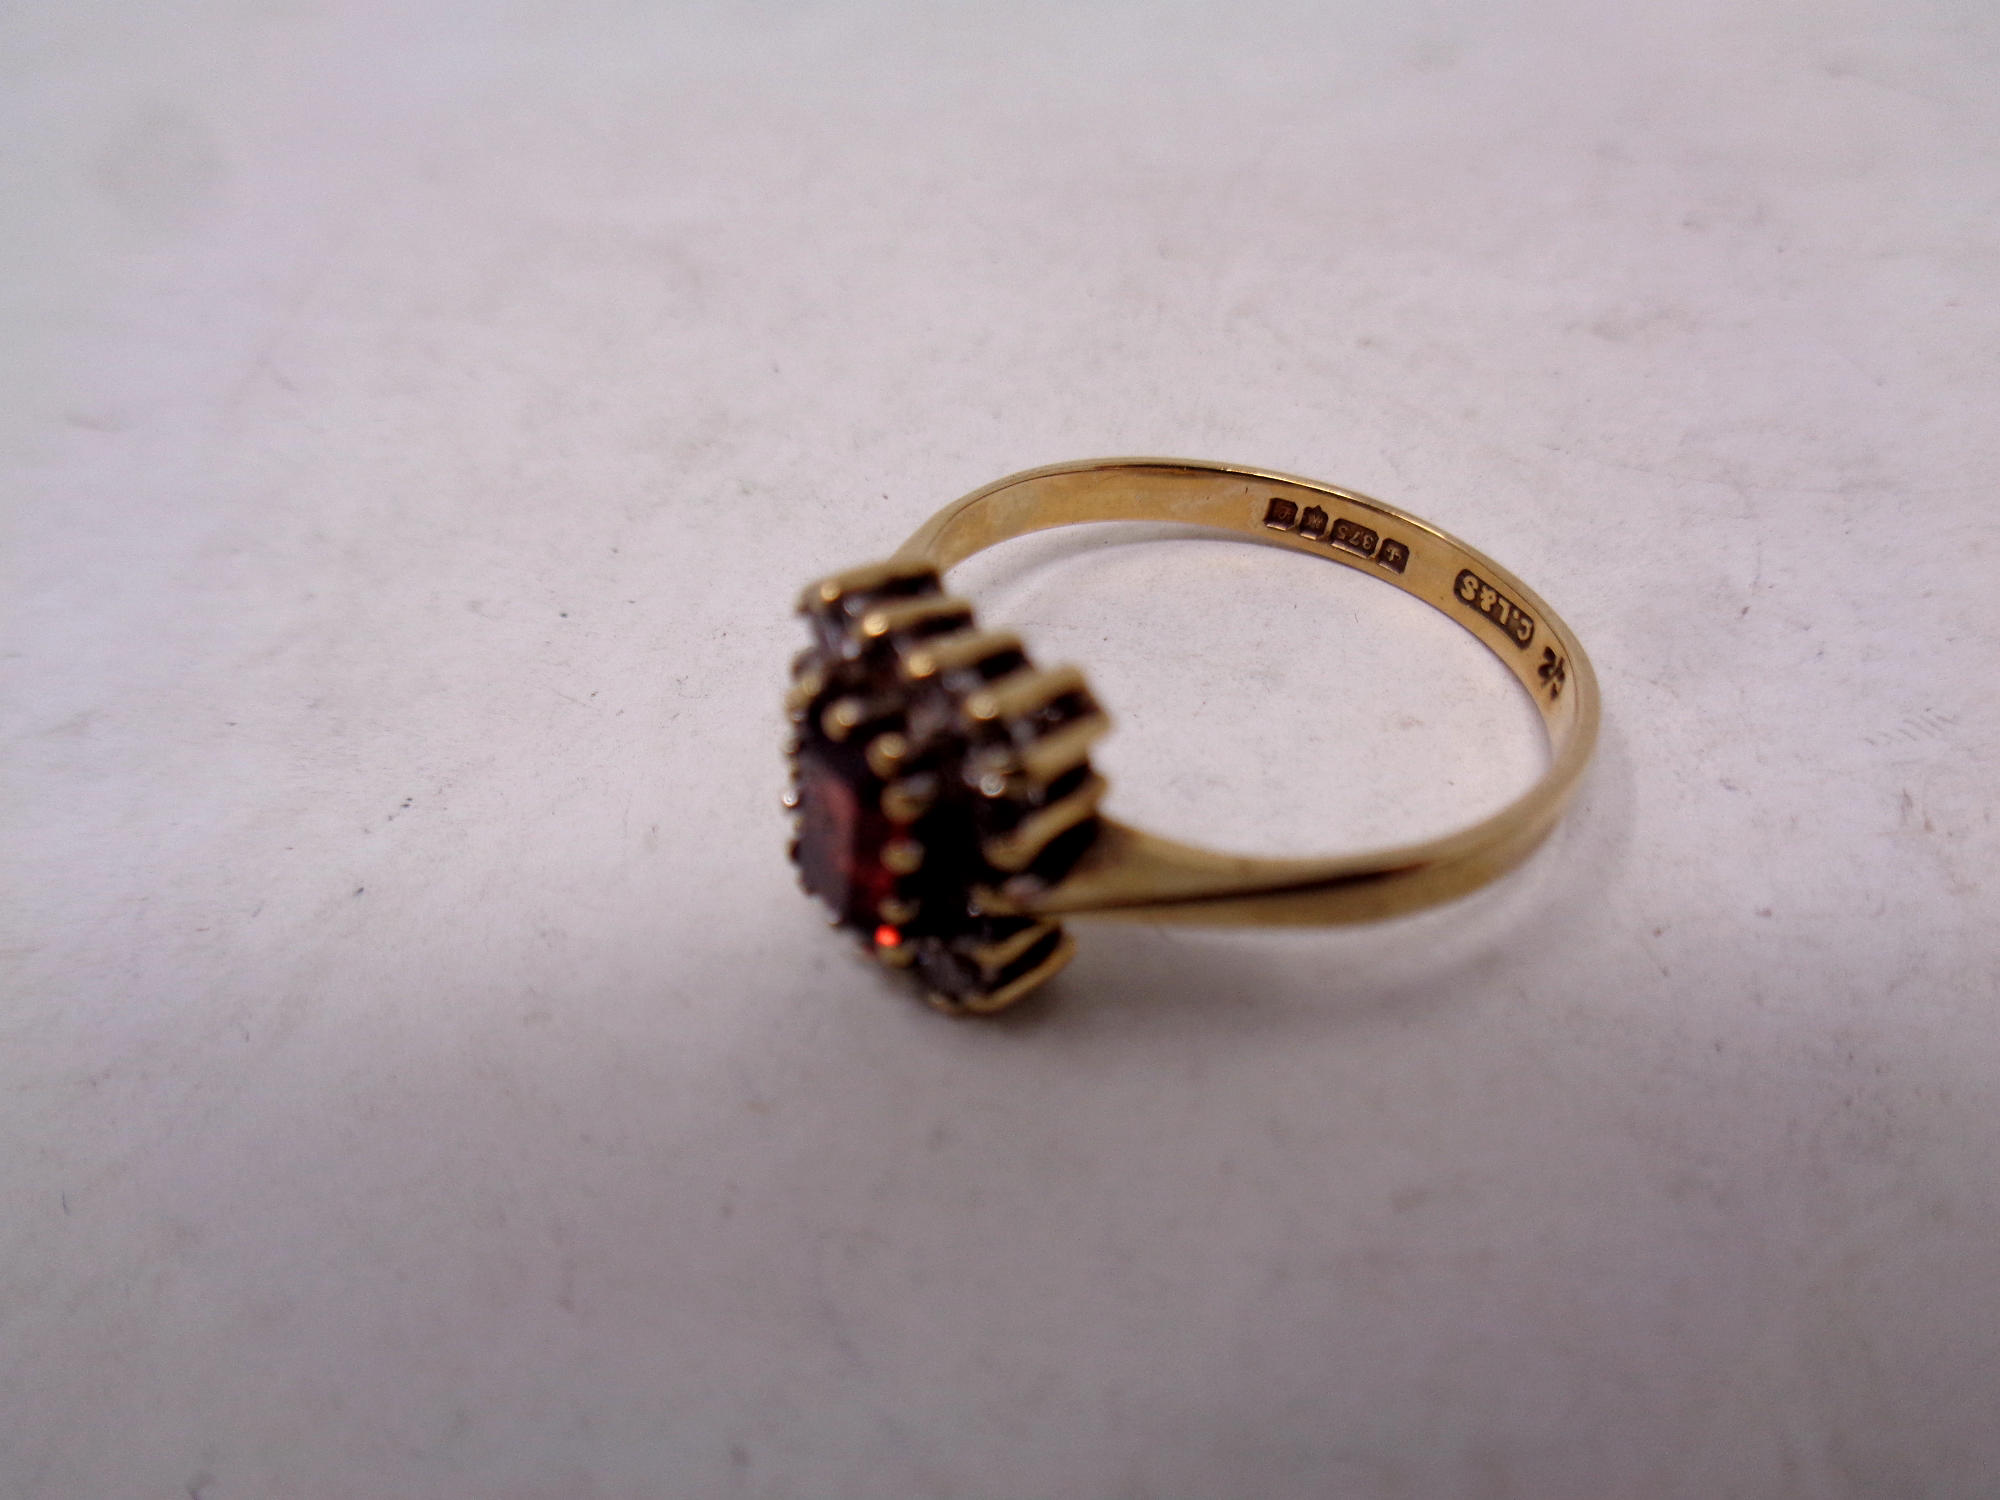 A 9 ct gold dress ring set with a garnet